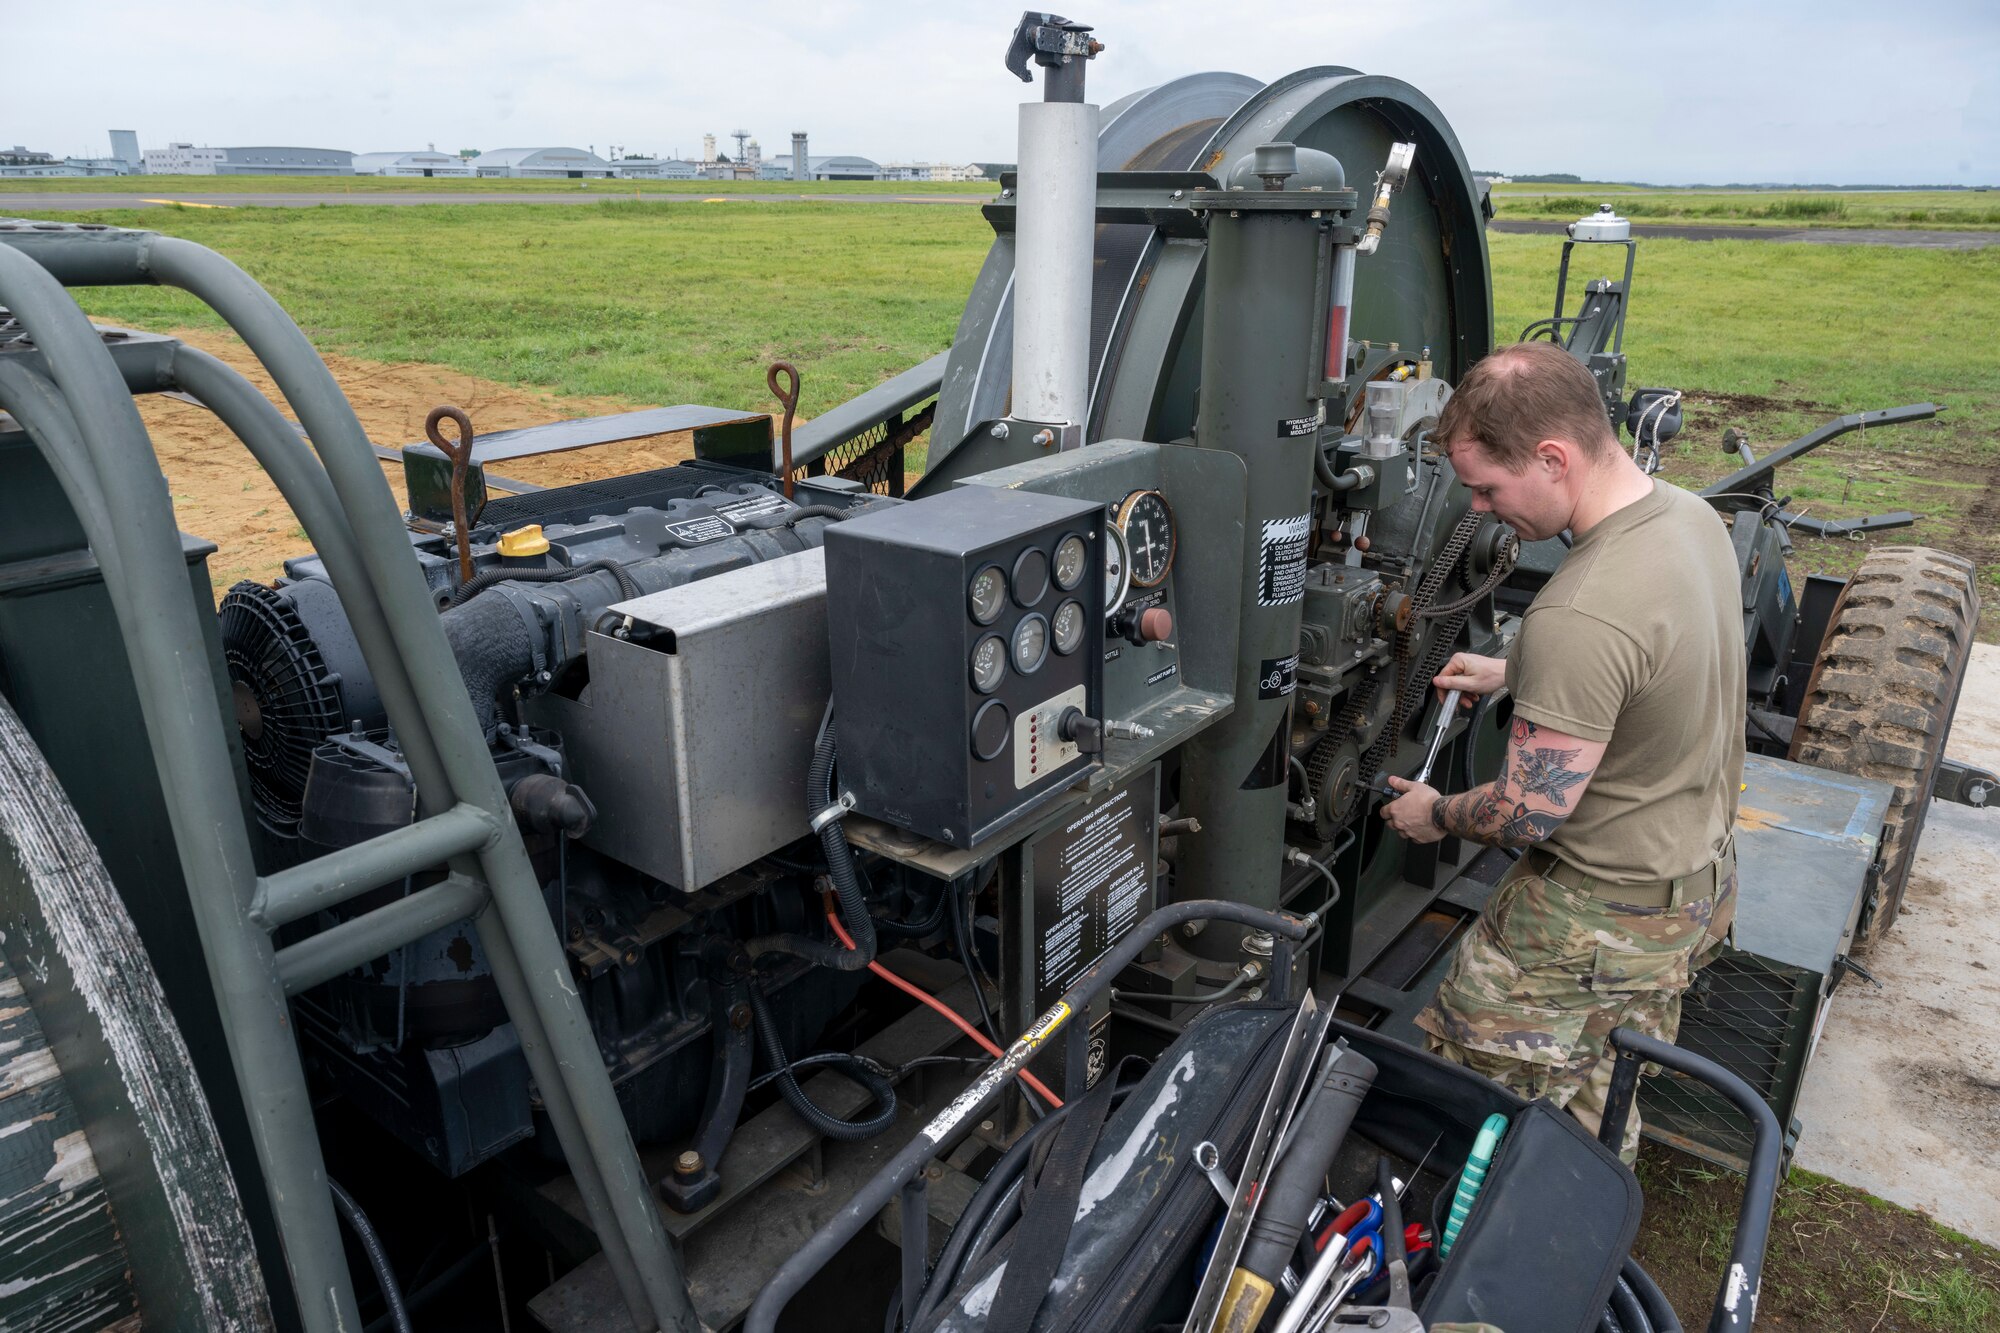 An Airman preforms maintenance on a machine.